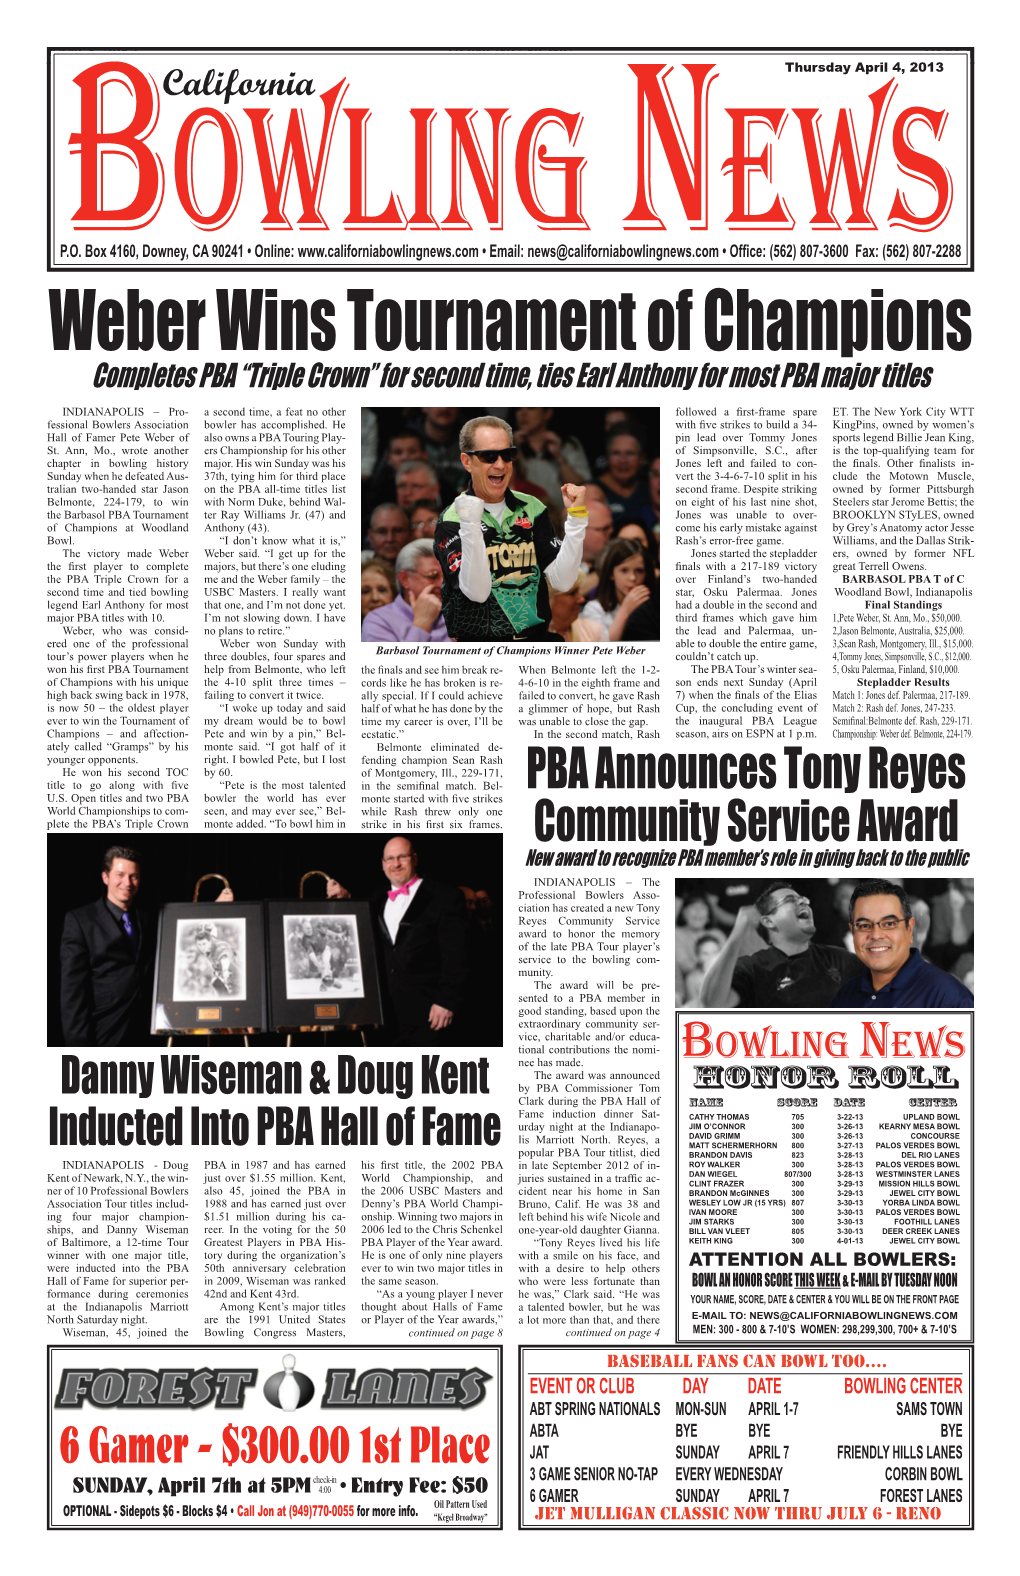 Weber Wins Tournament of Champions